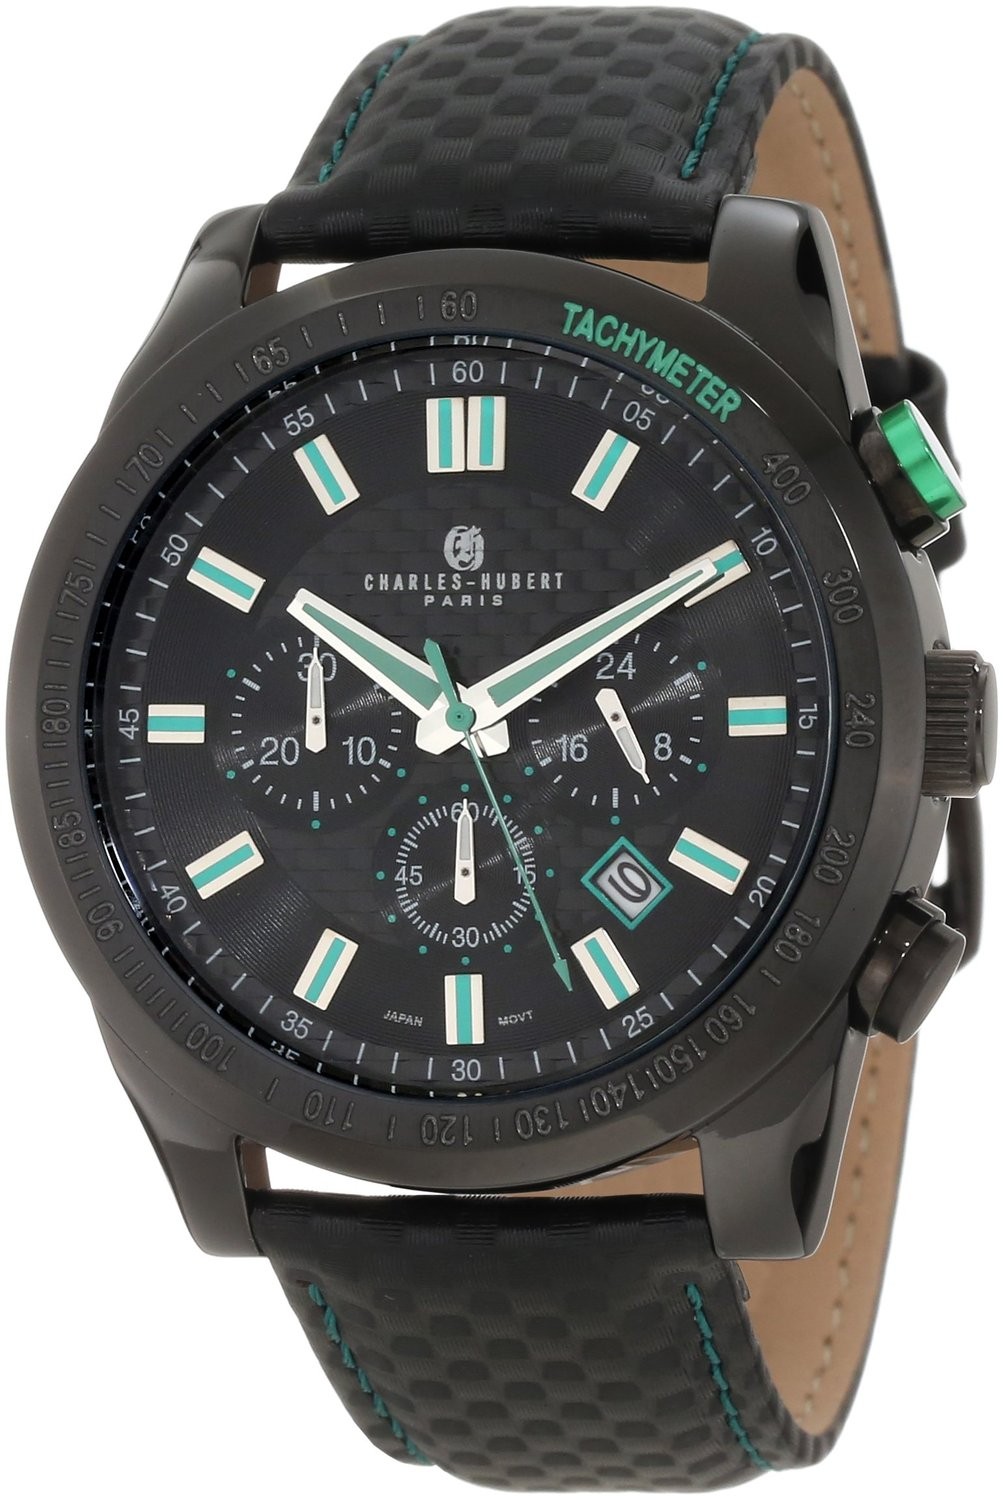 Charles-Hubert Paris Men's Black Plated Stainless Steel Chronograph Quartz Watch